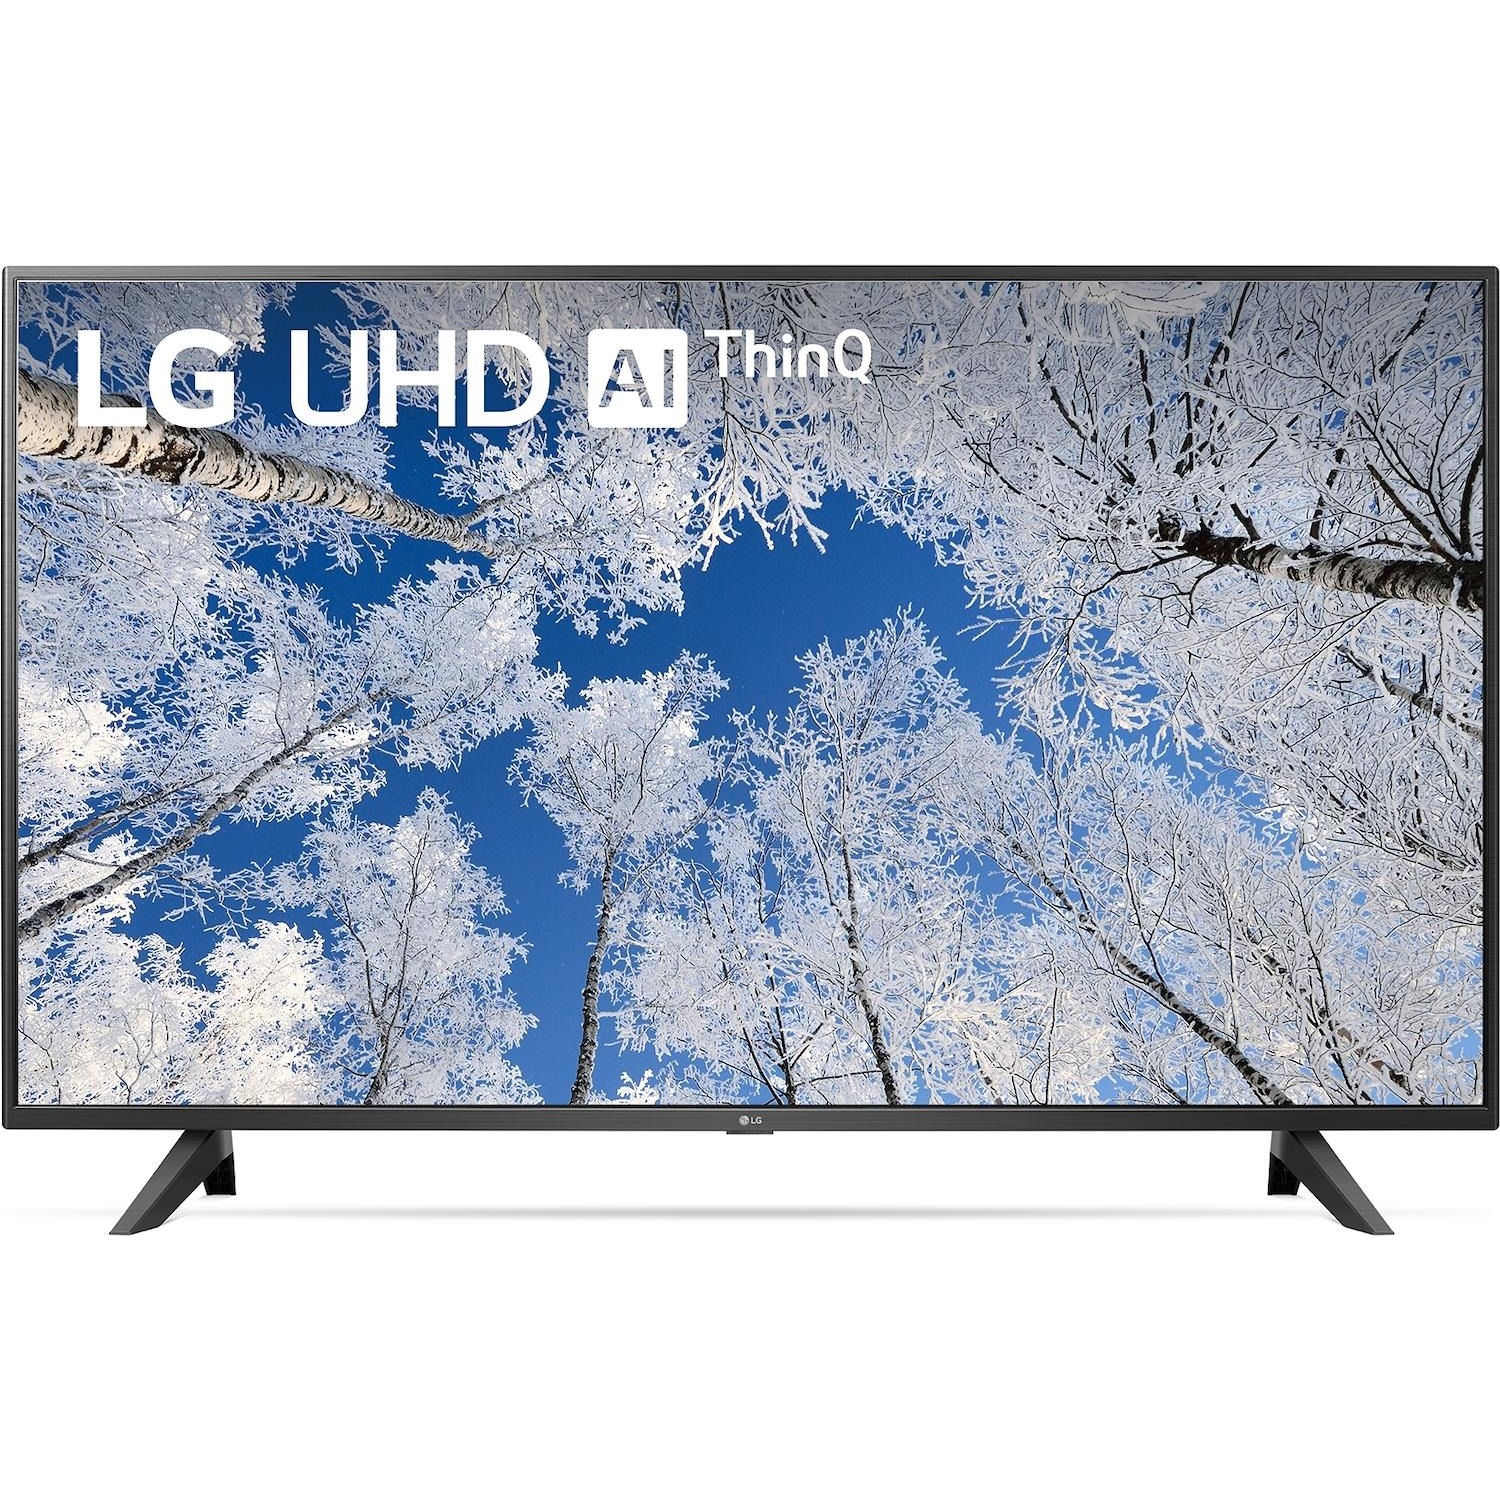 Immagine per TV LED LG 65UQ70006 Calibrato 4K e FULL HD da DIMOStore